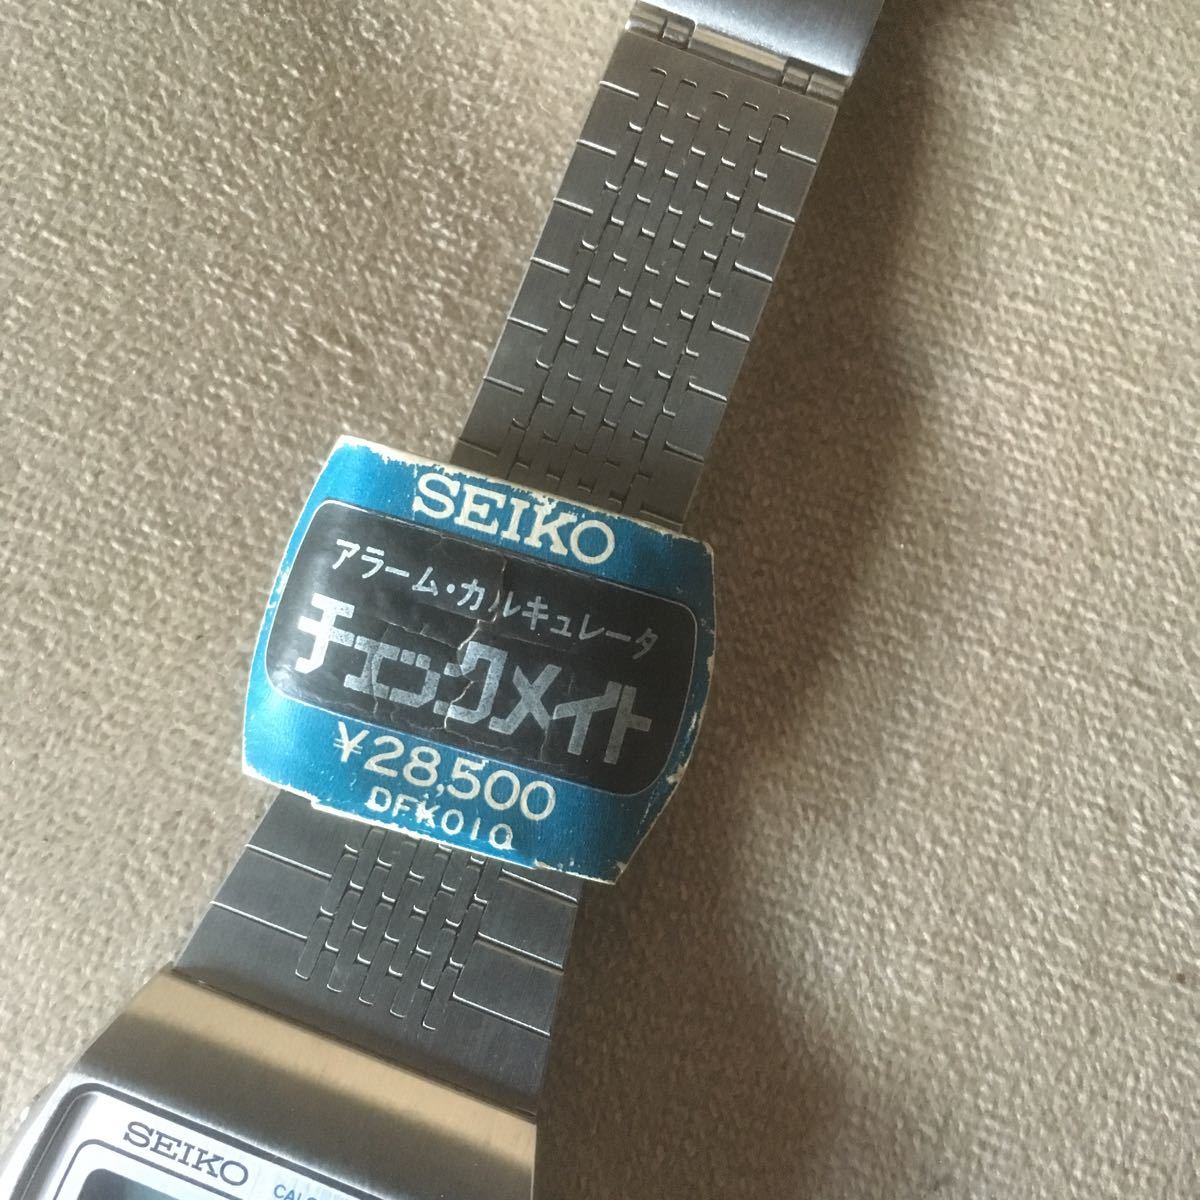 K12 SEIKO Seiko checkmate alarm wristwatch 0359-5000 dead stock present condition junk 